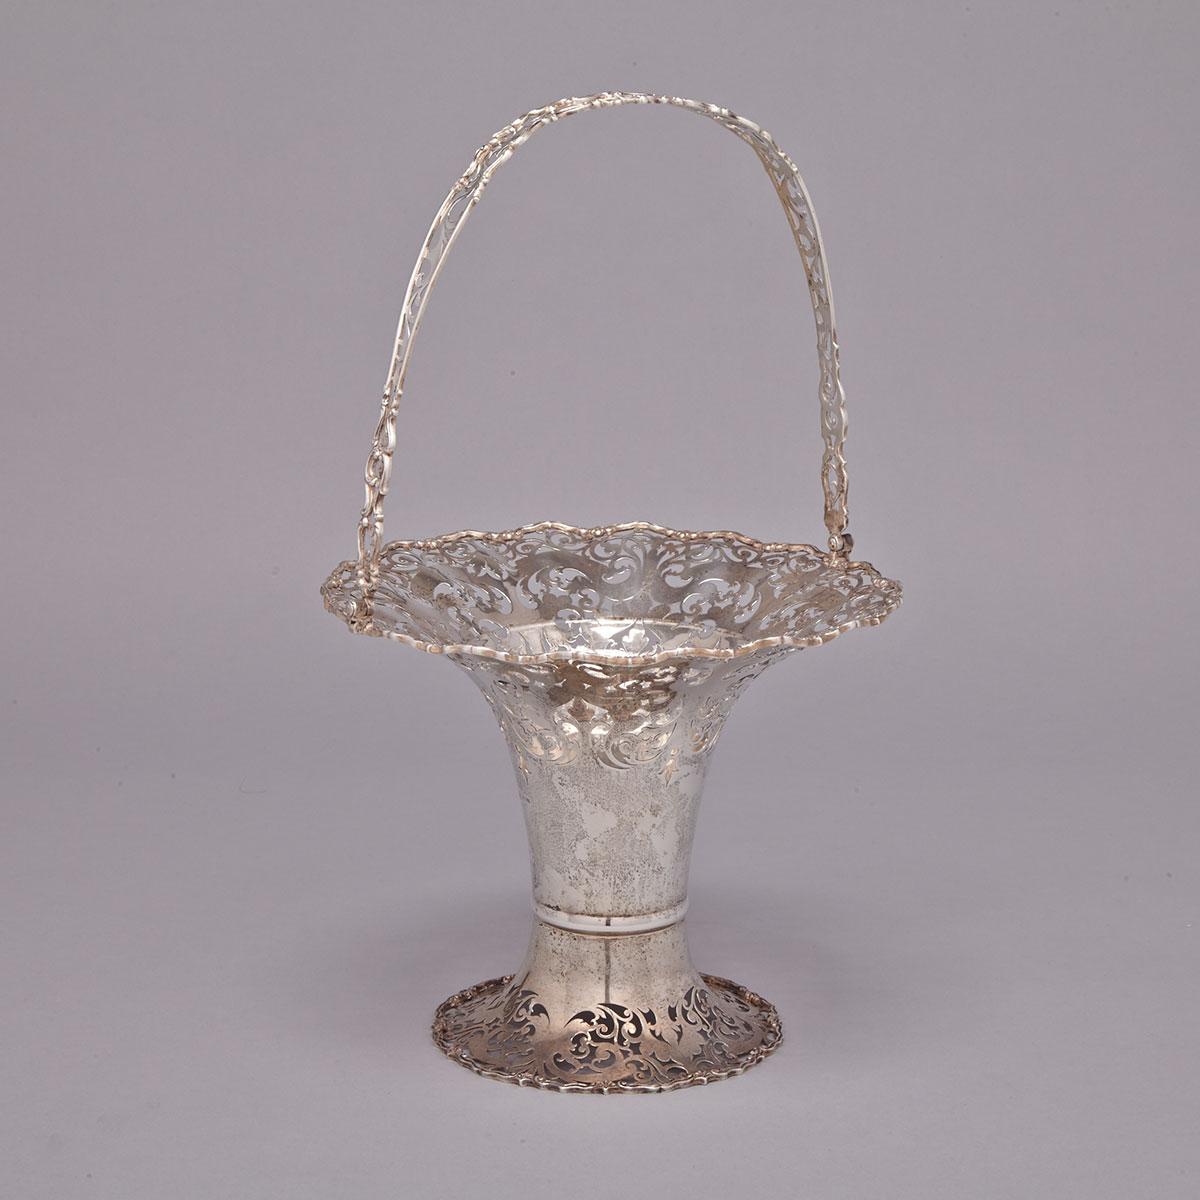 English Silver Flower Basket, Josiah Williams & Co., London, 1912